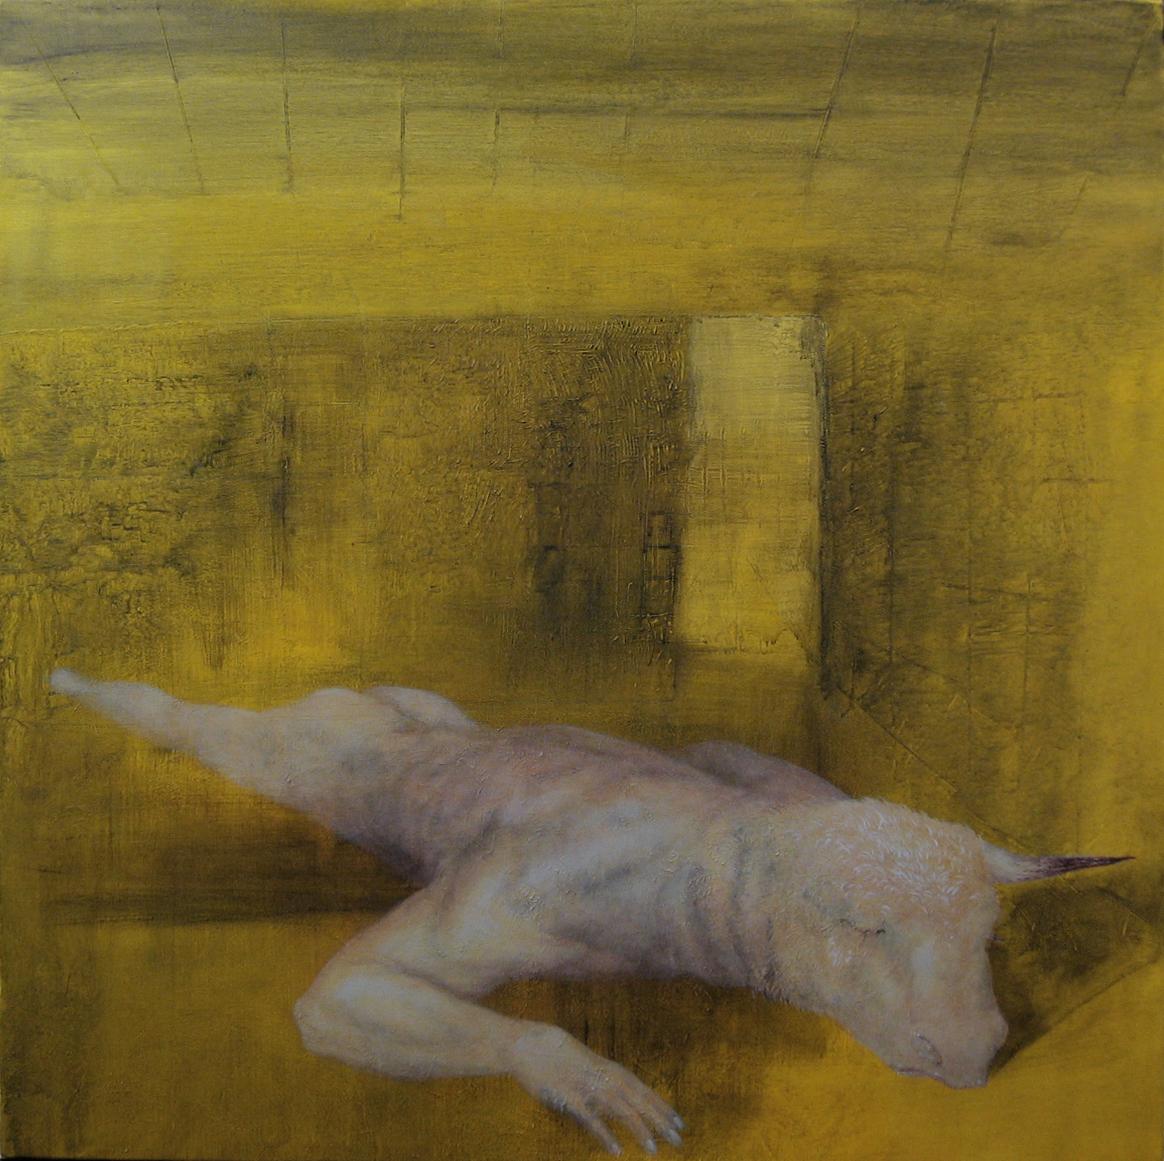 Figurative Painting Alexandru Rădvan - Sulphur - 21e siècle, jaune, minotaure, art figuratif, mythe, contemporain